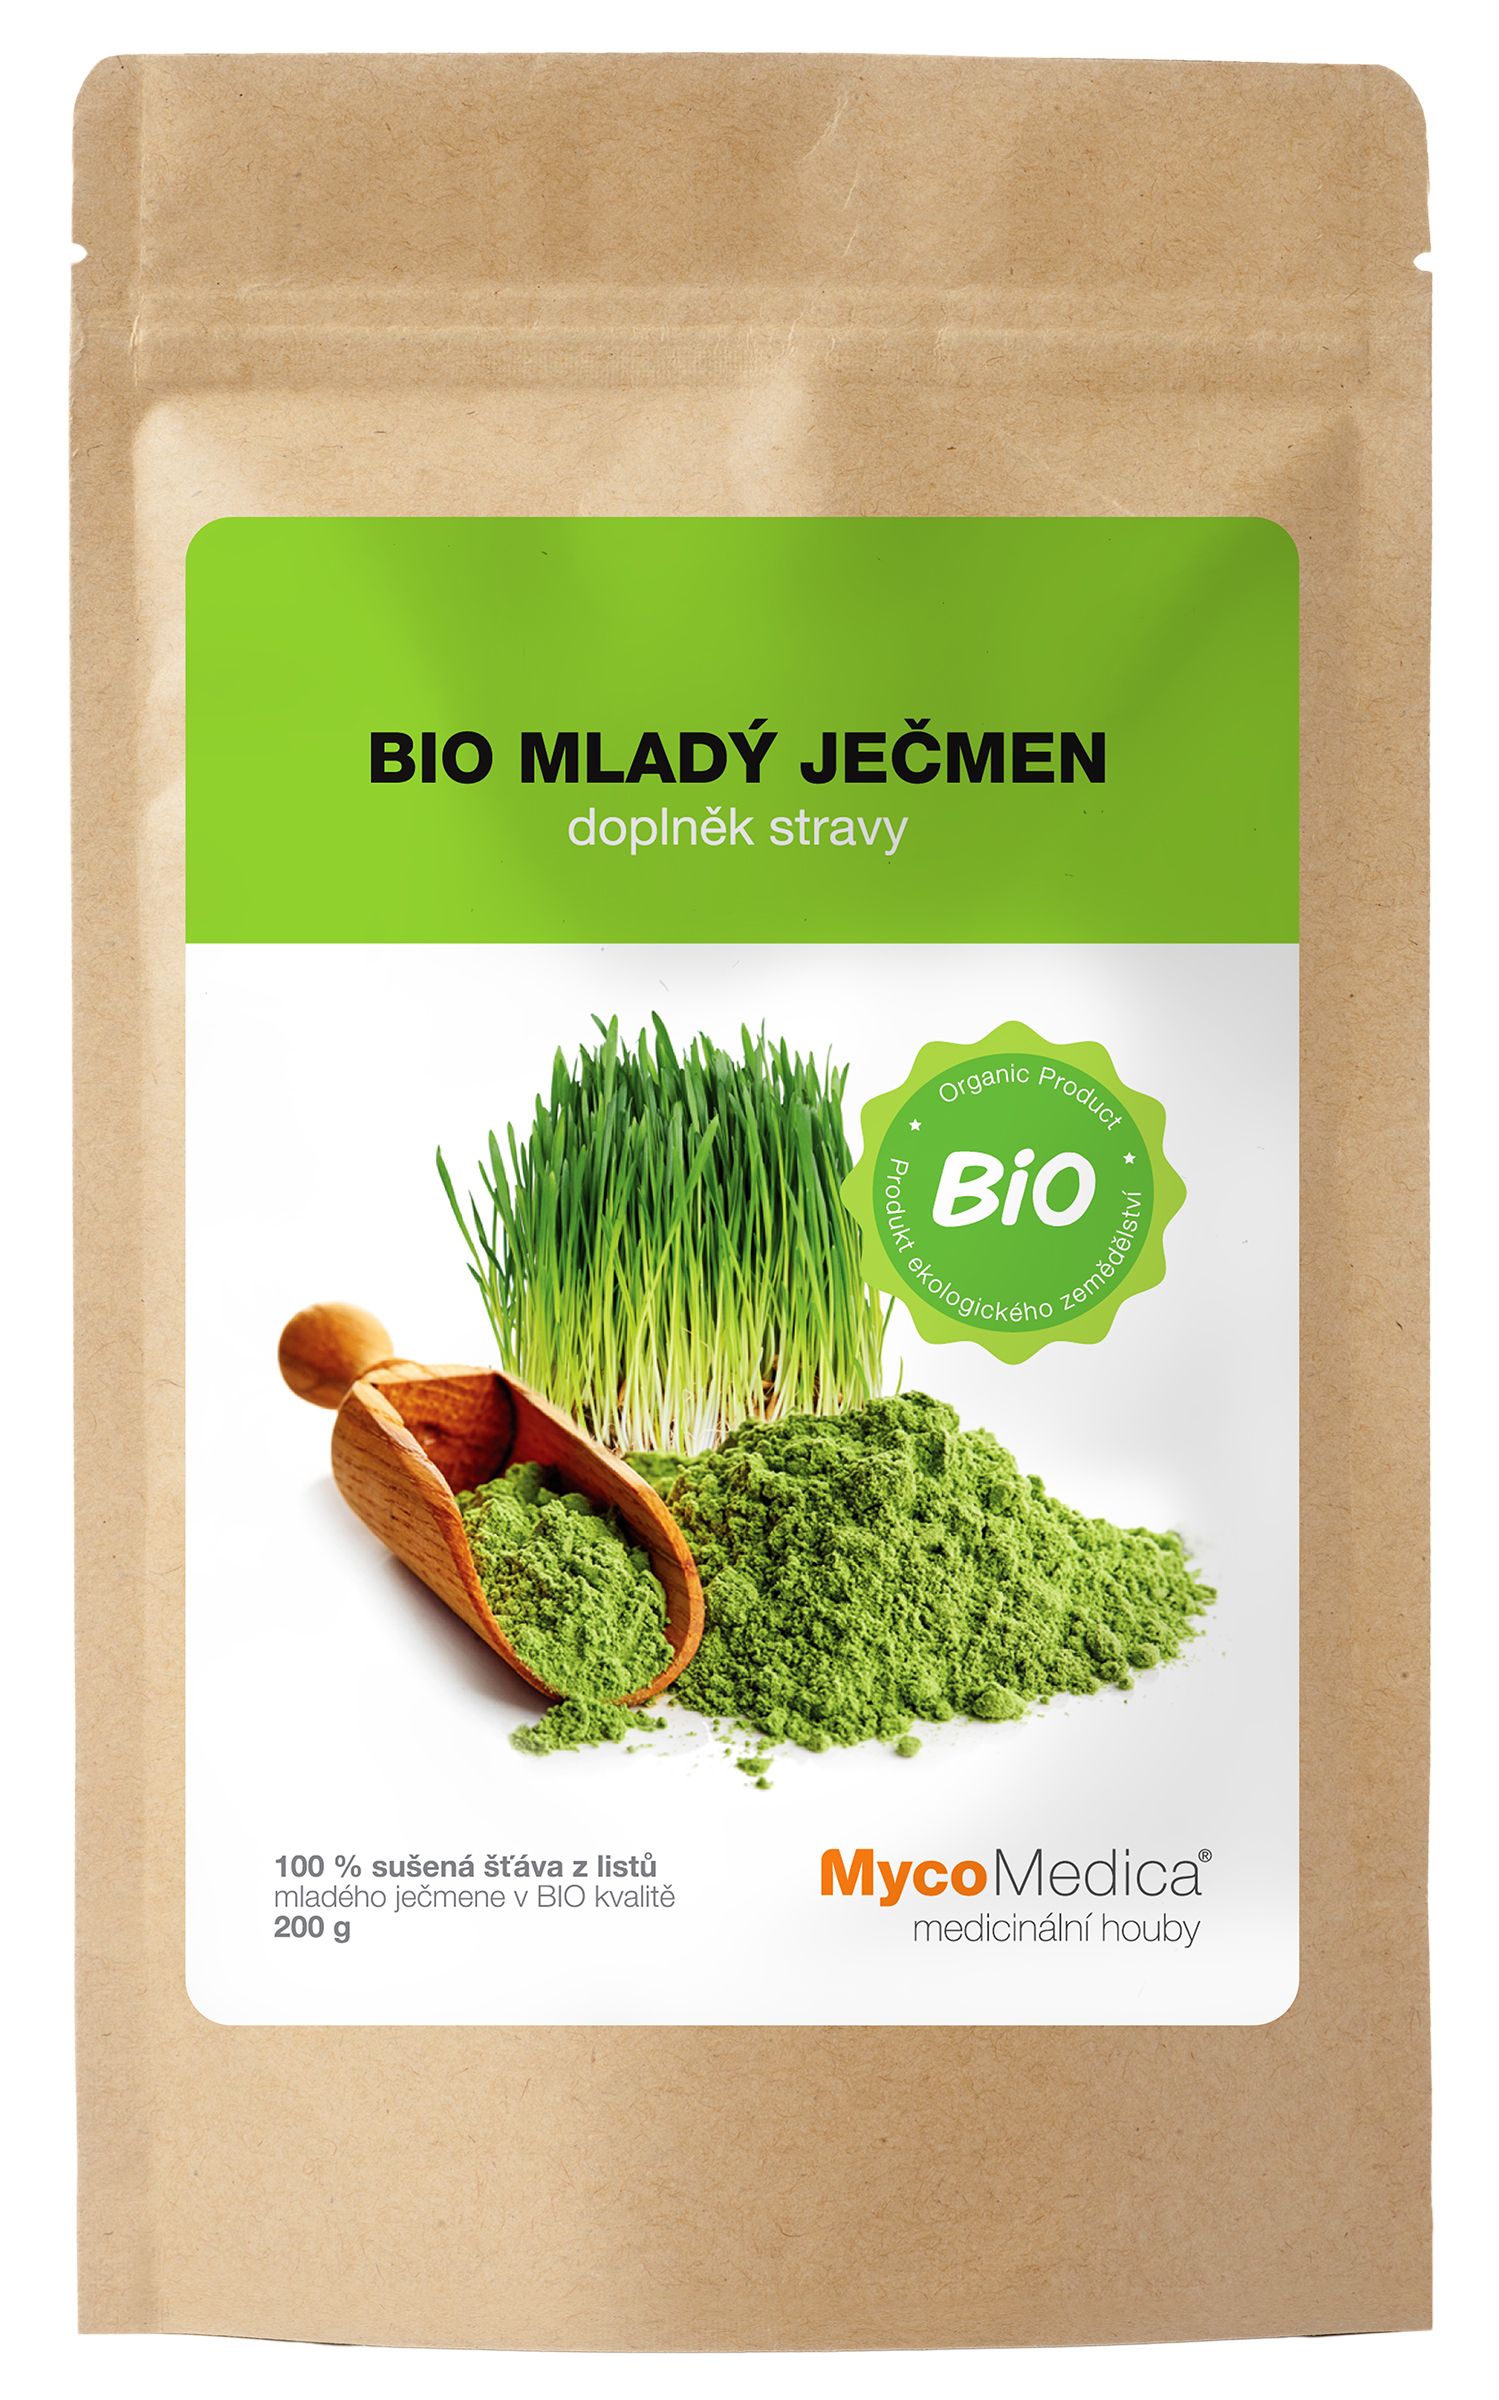 Mycomedica Biomlady Jacmen 200g